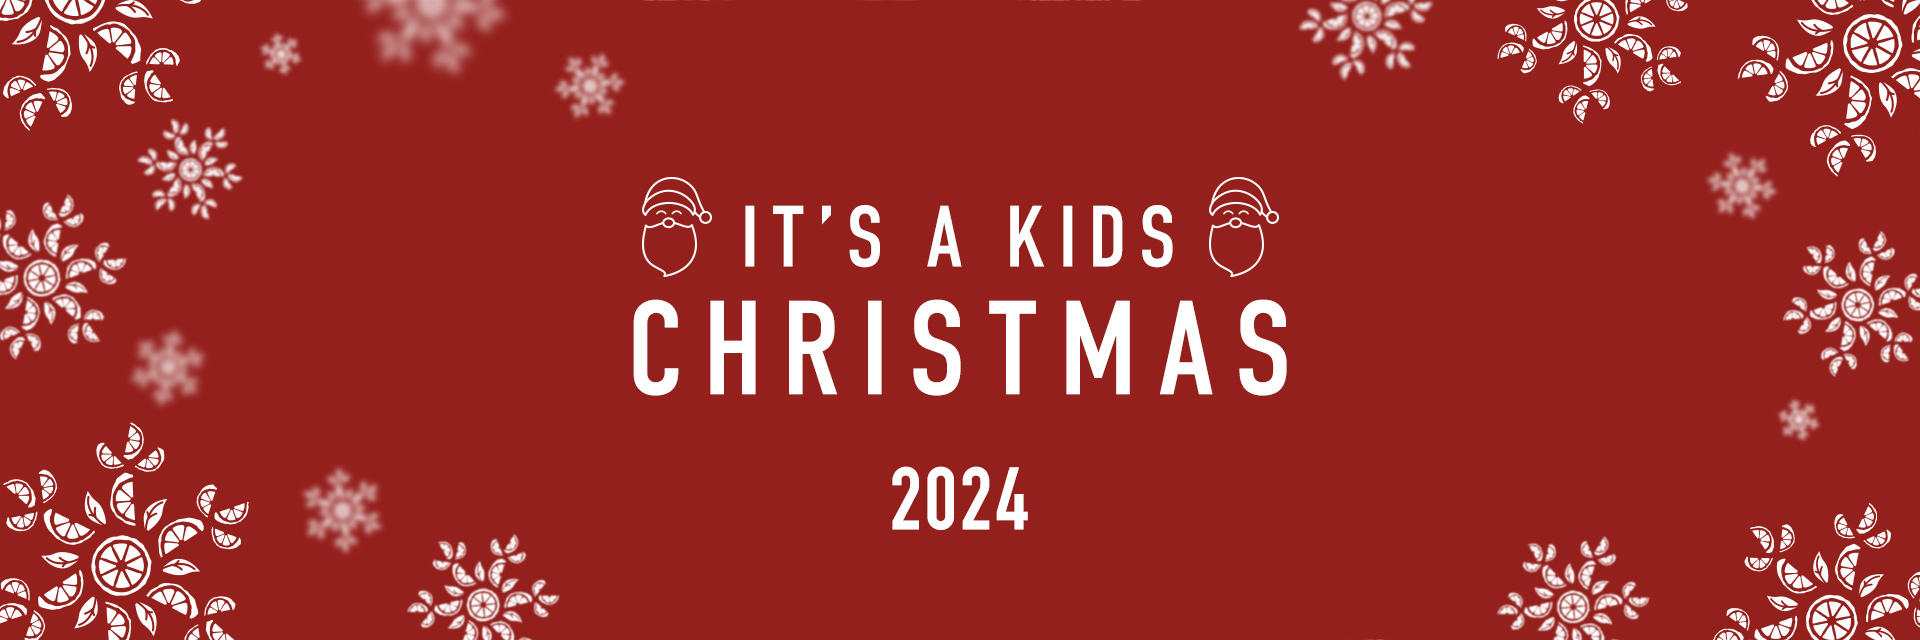 Kids Christmas Menu 2024 at Harvester Trentham Lakes